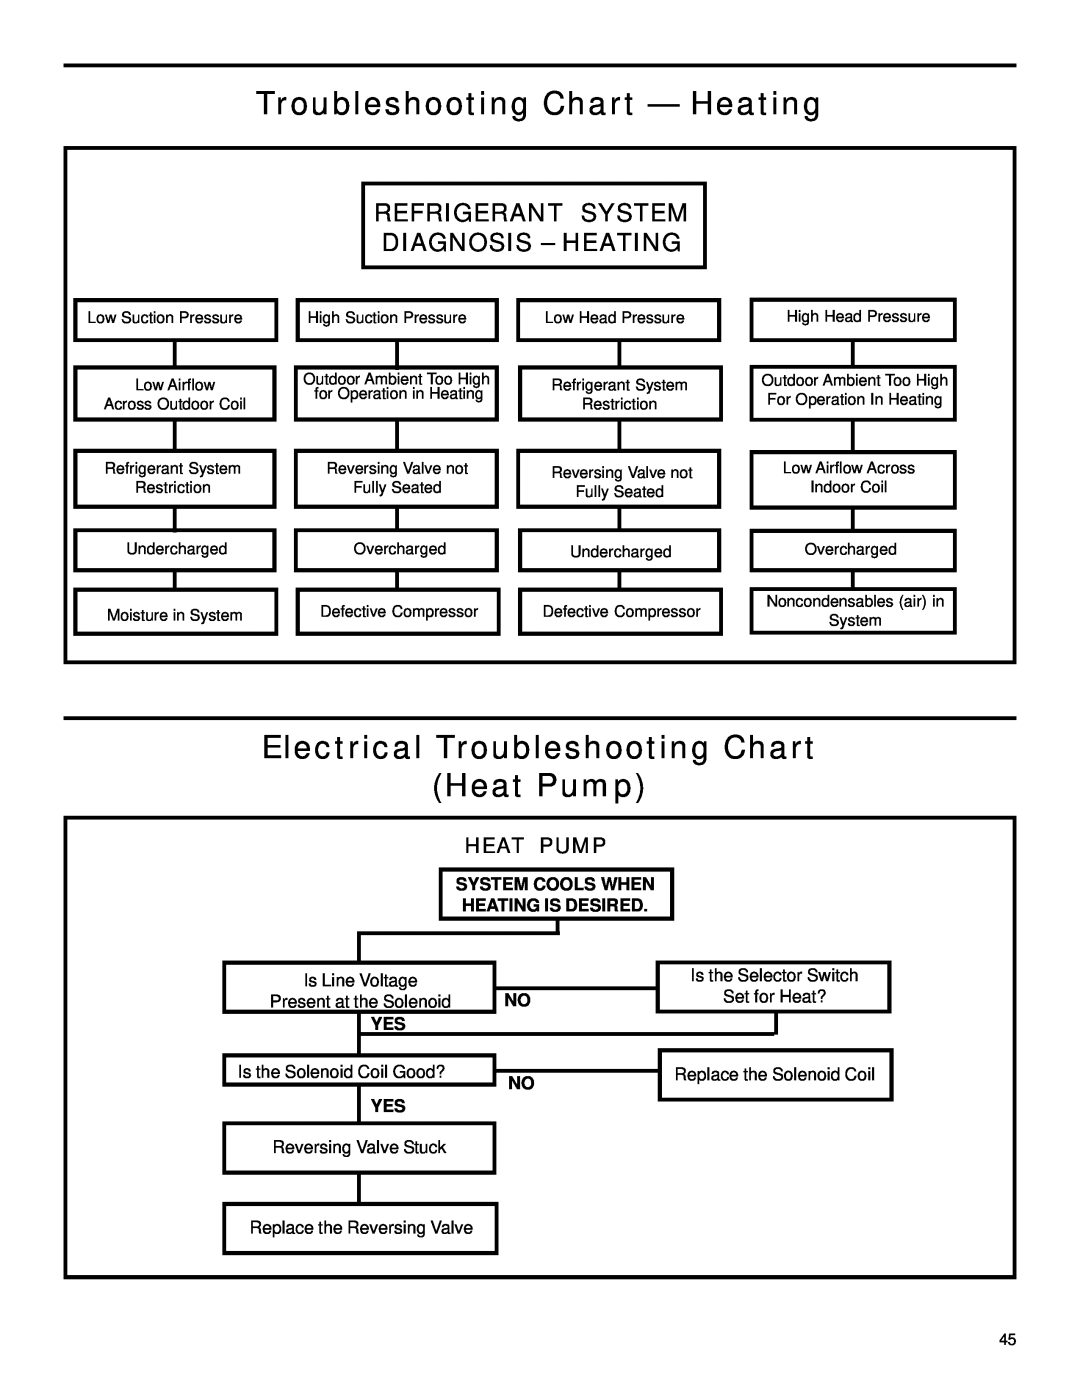 Friedrich racservmn service manual Troubleshooting Chart — Heating, Electrical Troubleshooting Chart Heat Pump 